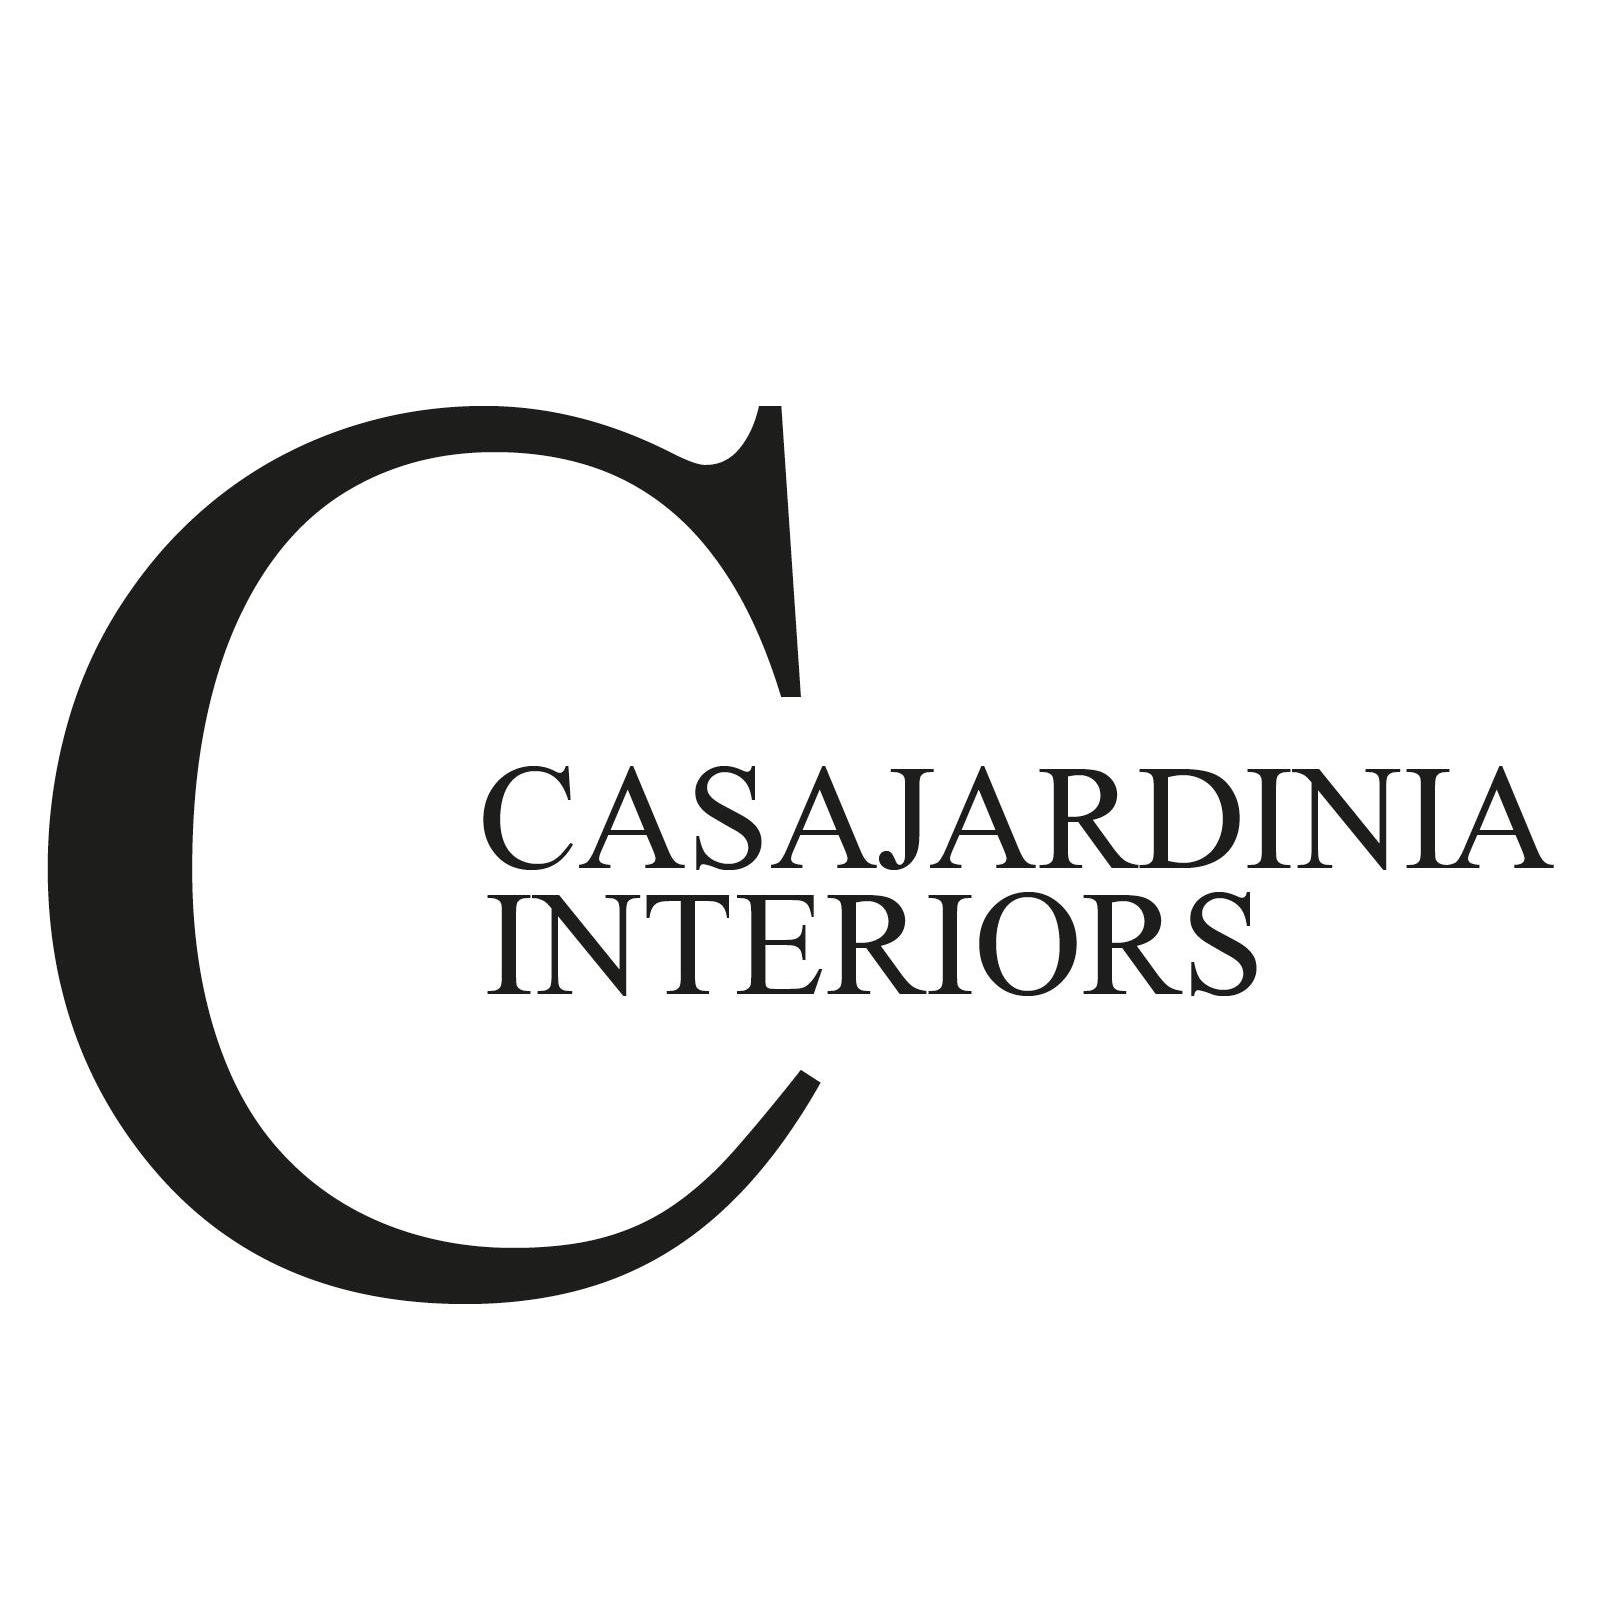 Casajardinia Interiors Logo